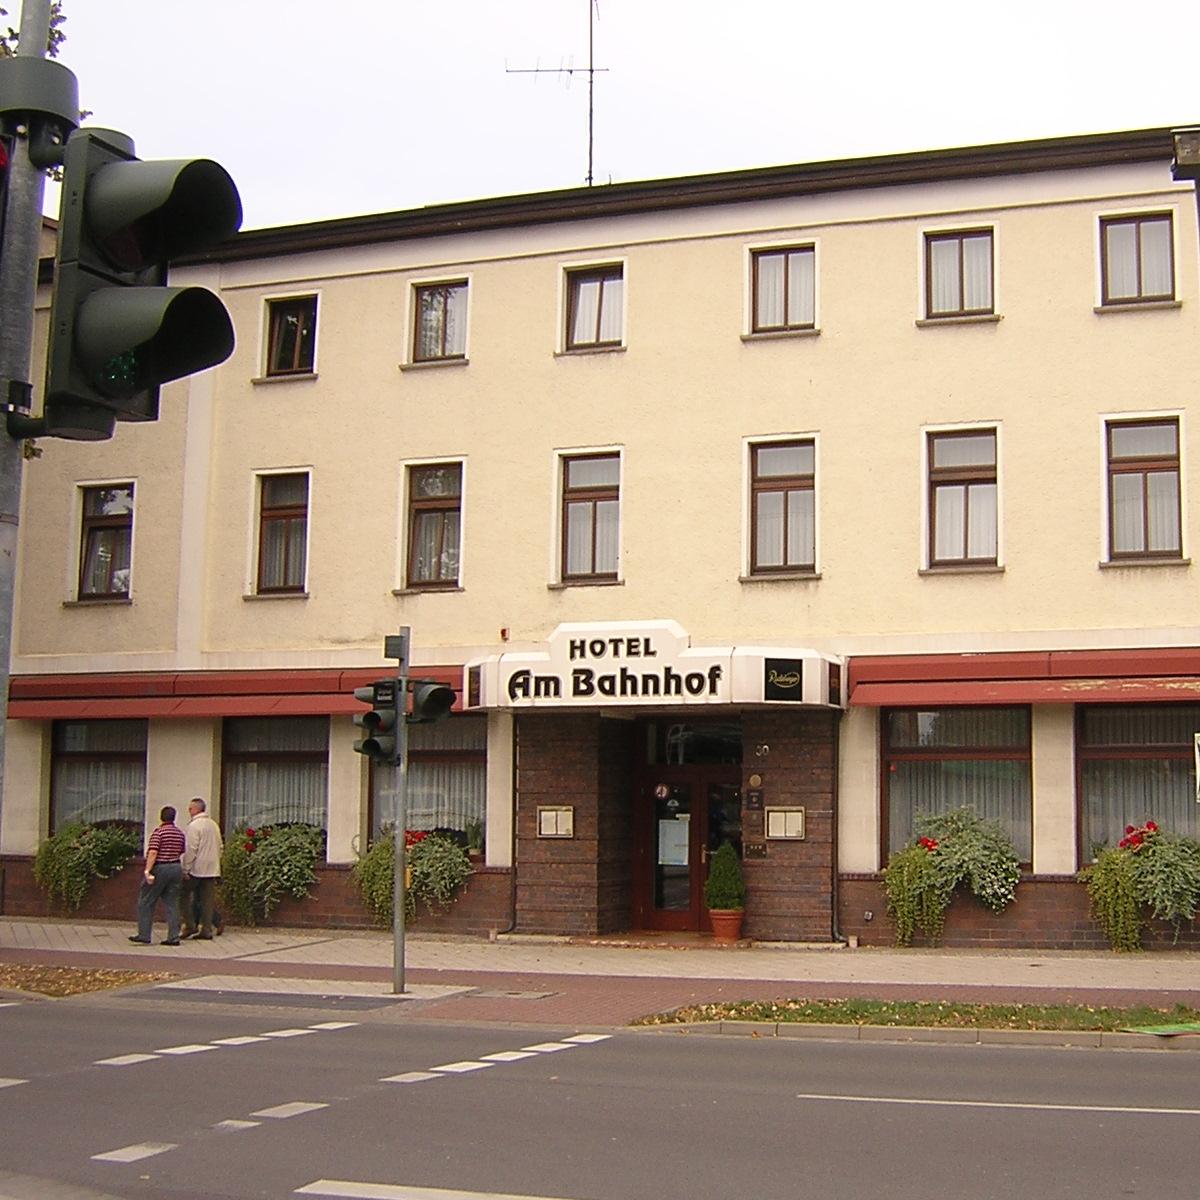 Restaurant "Hotel Am Bahnhof" in  Stendal